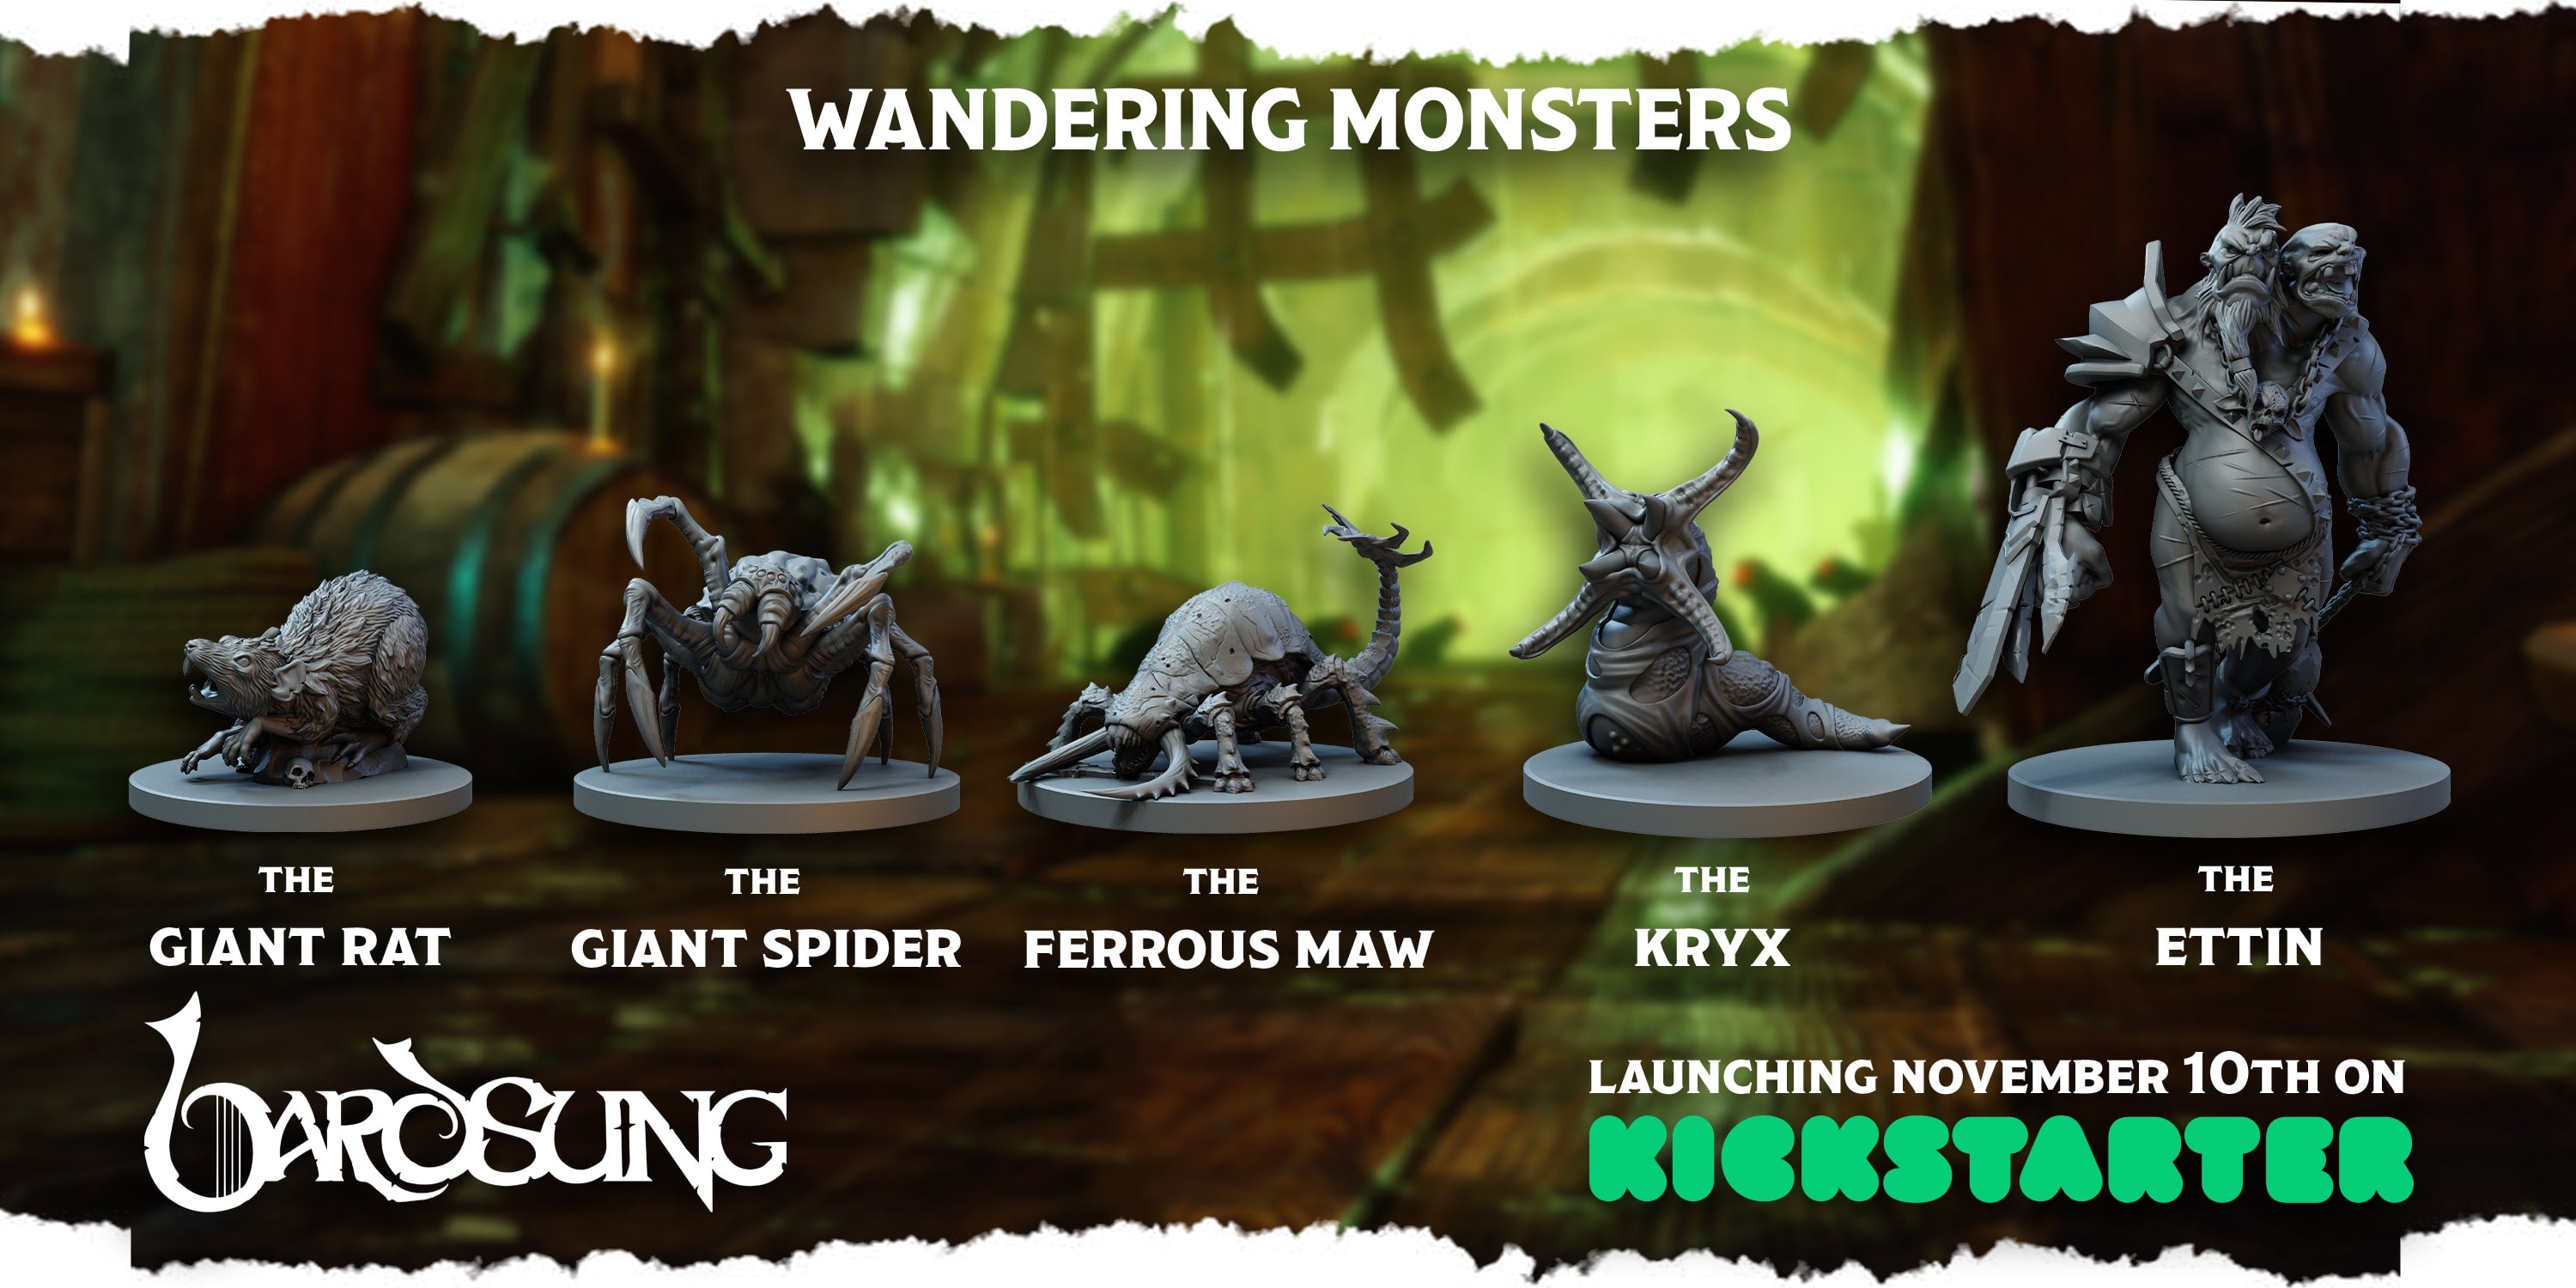 Bardsung-Wandering-Monsters